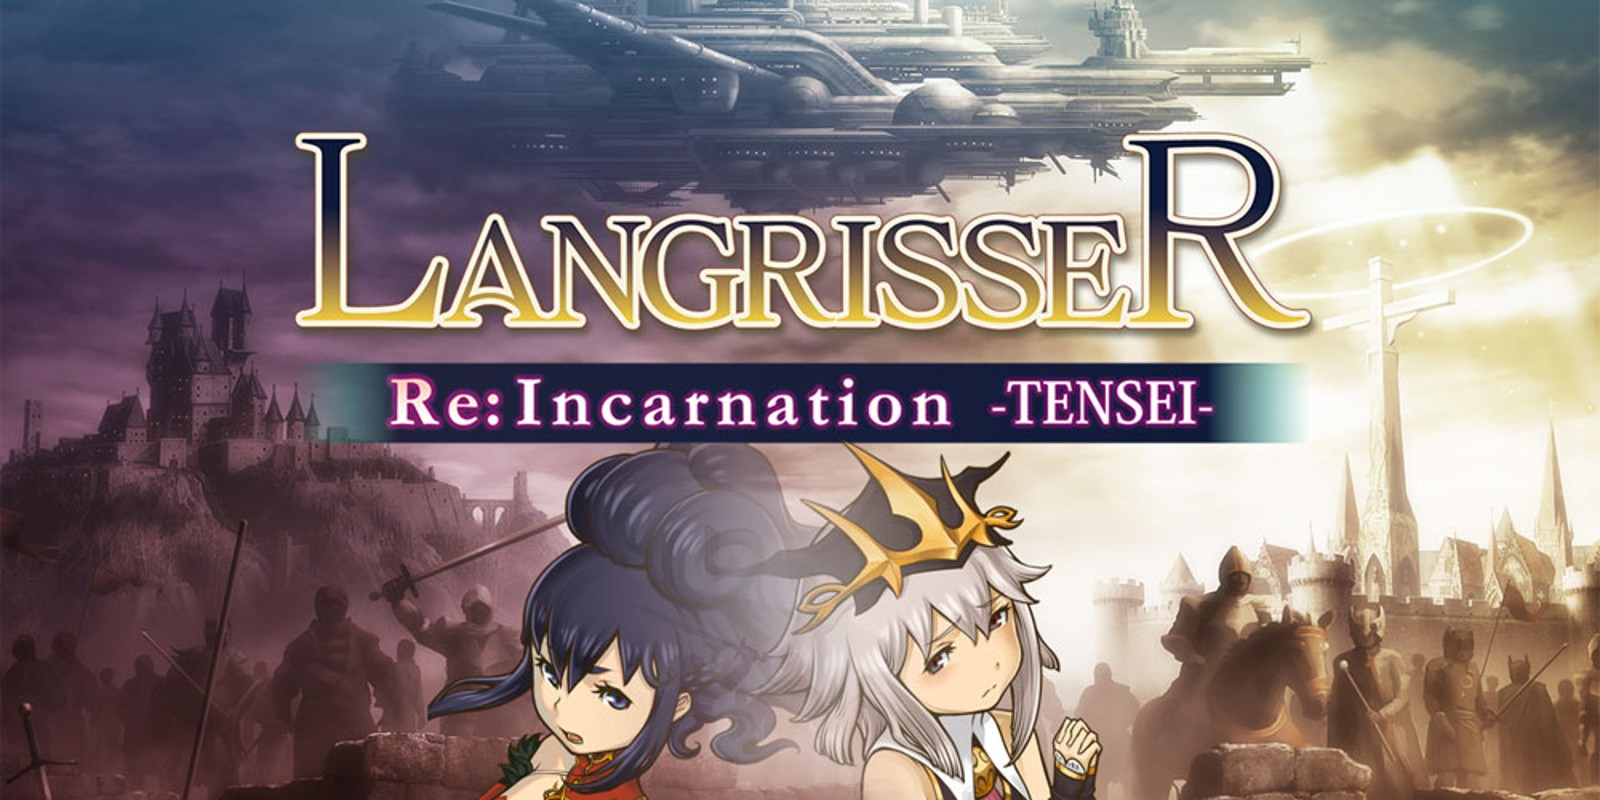 Langrisser Re:Incarnation -TENSEI-